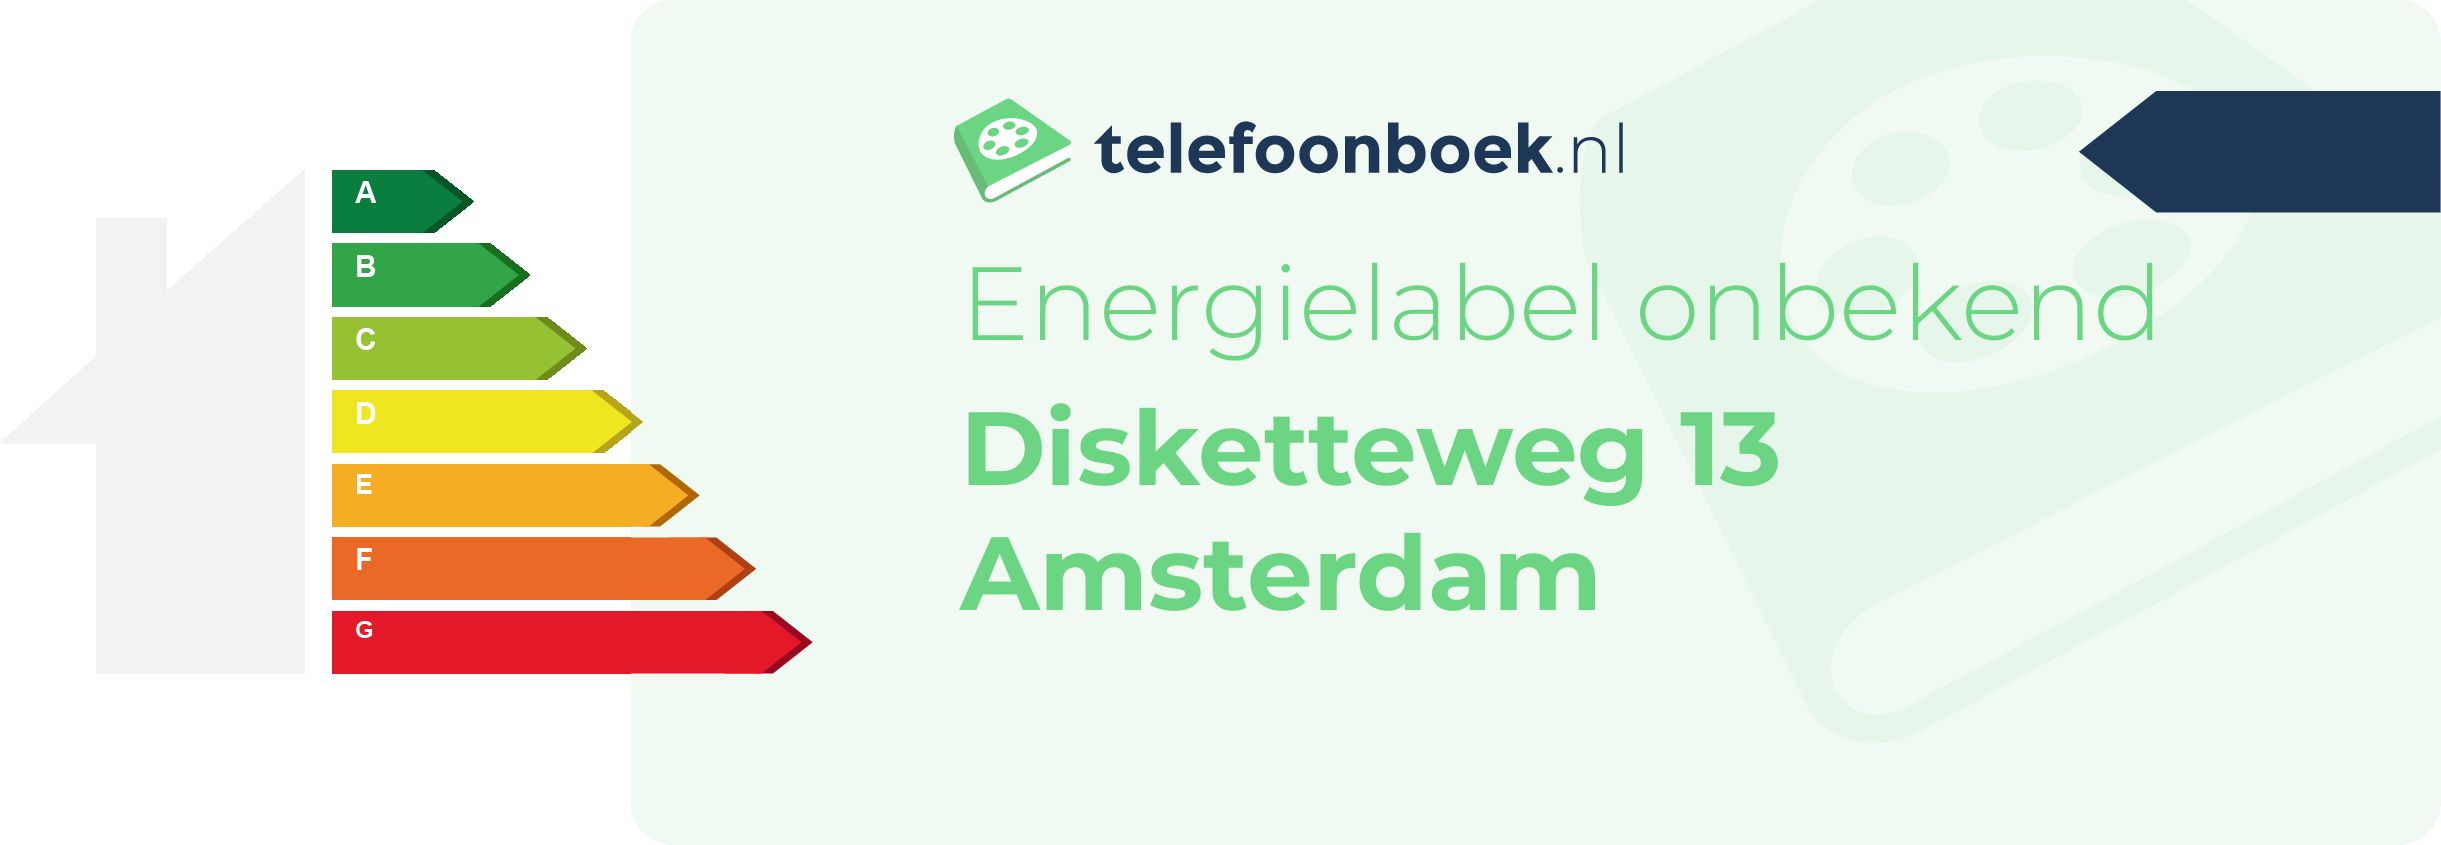 Energielabel Disketteweg 13 Amsterdam